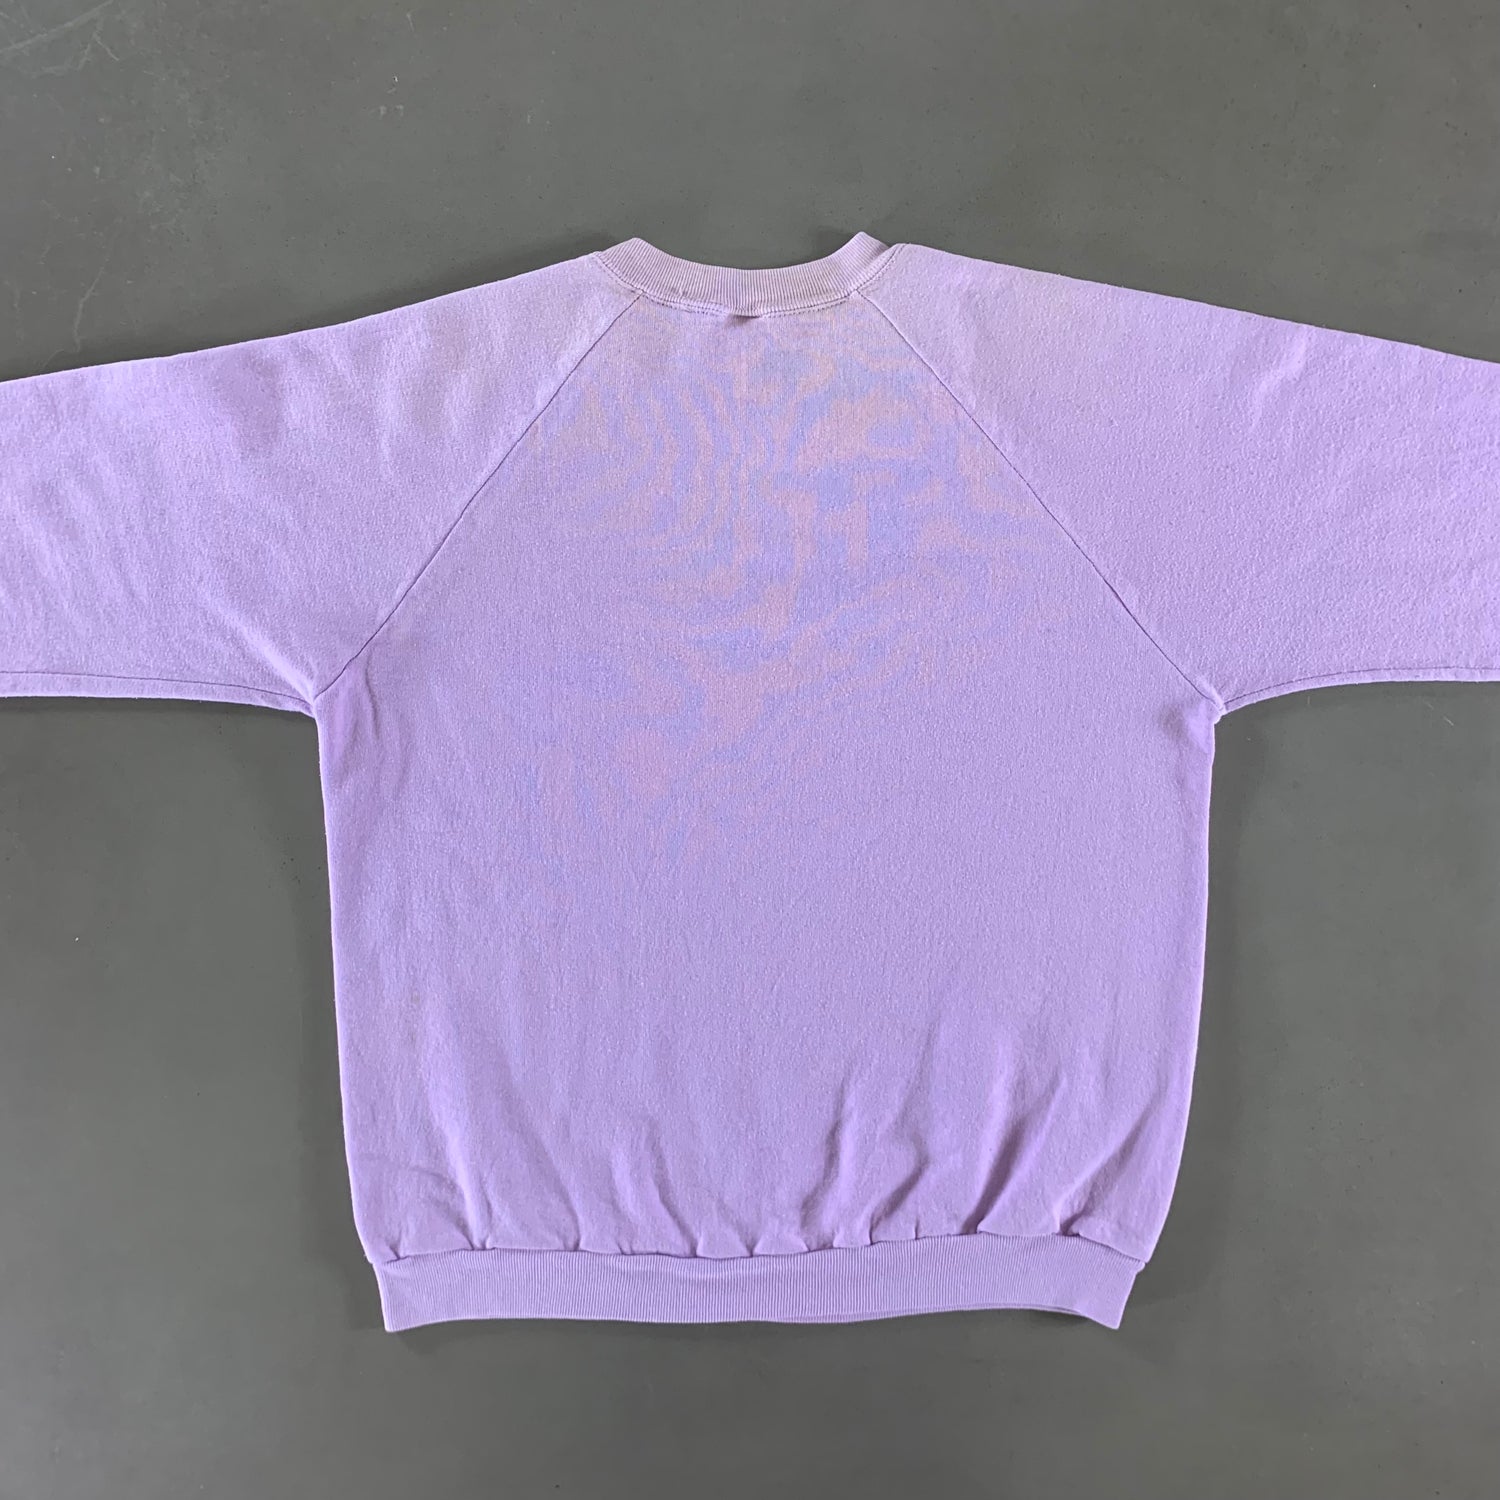 Vintage 1980s Tai Chi Sweatshirt size XL